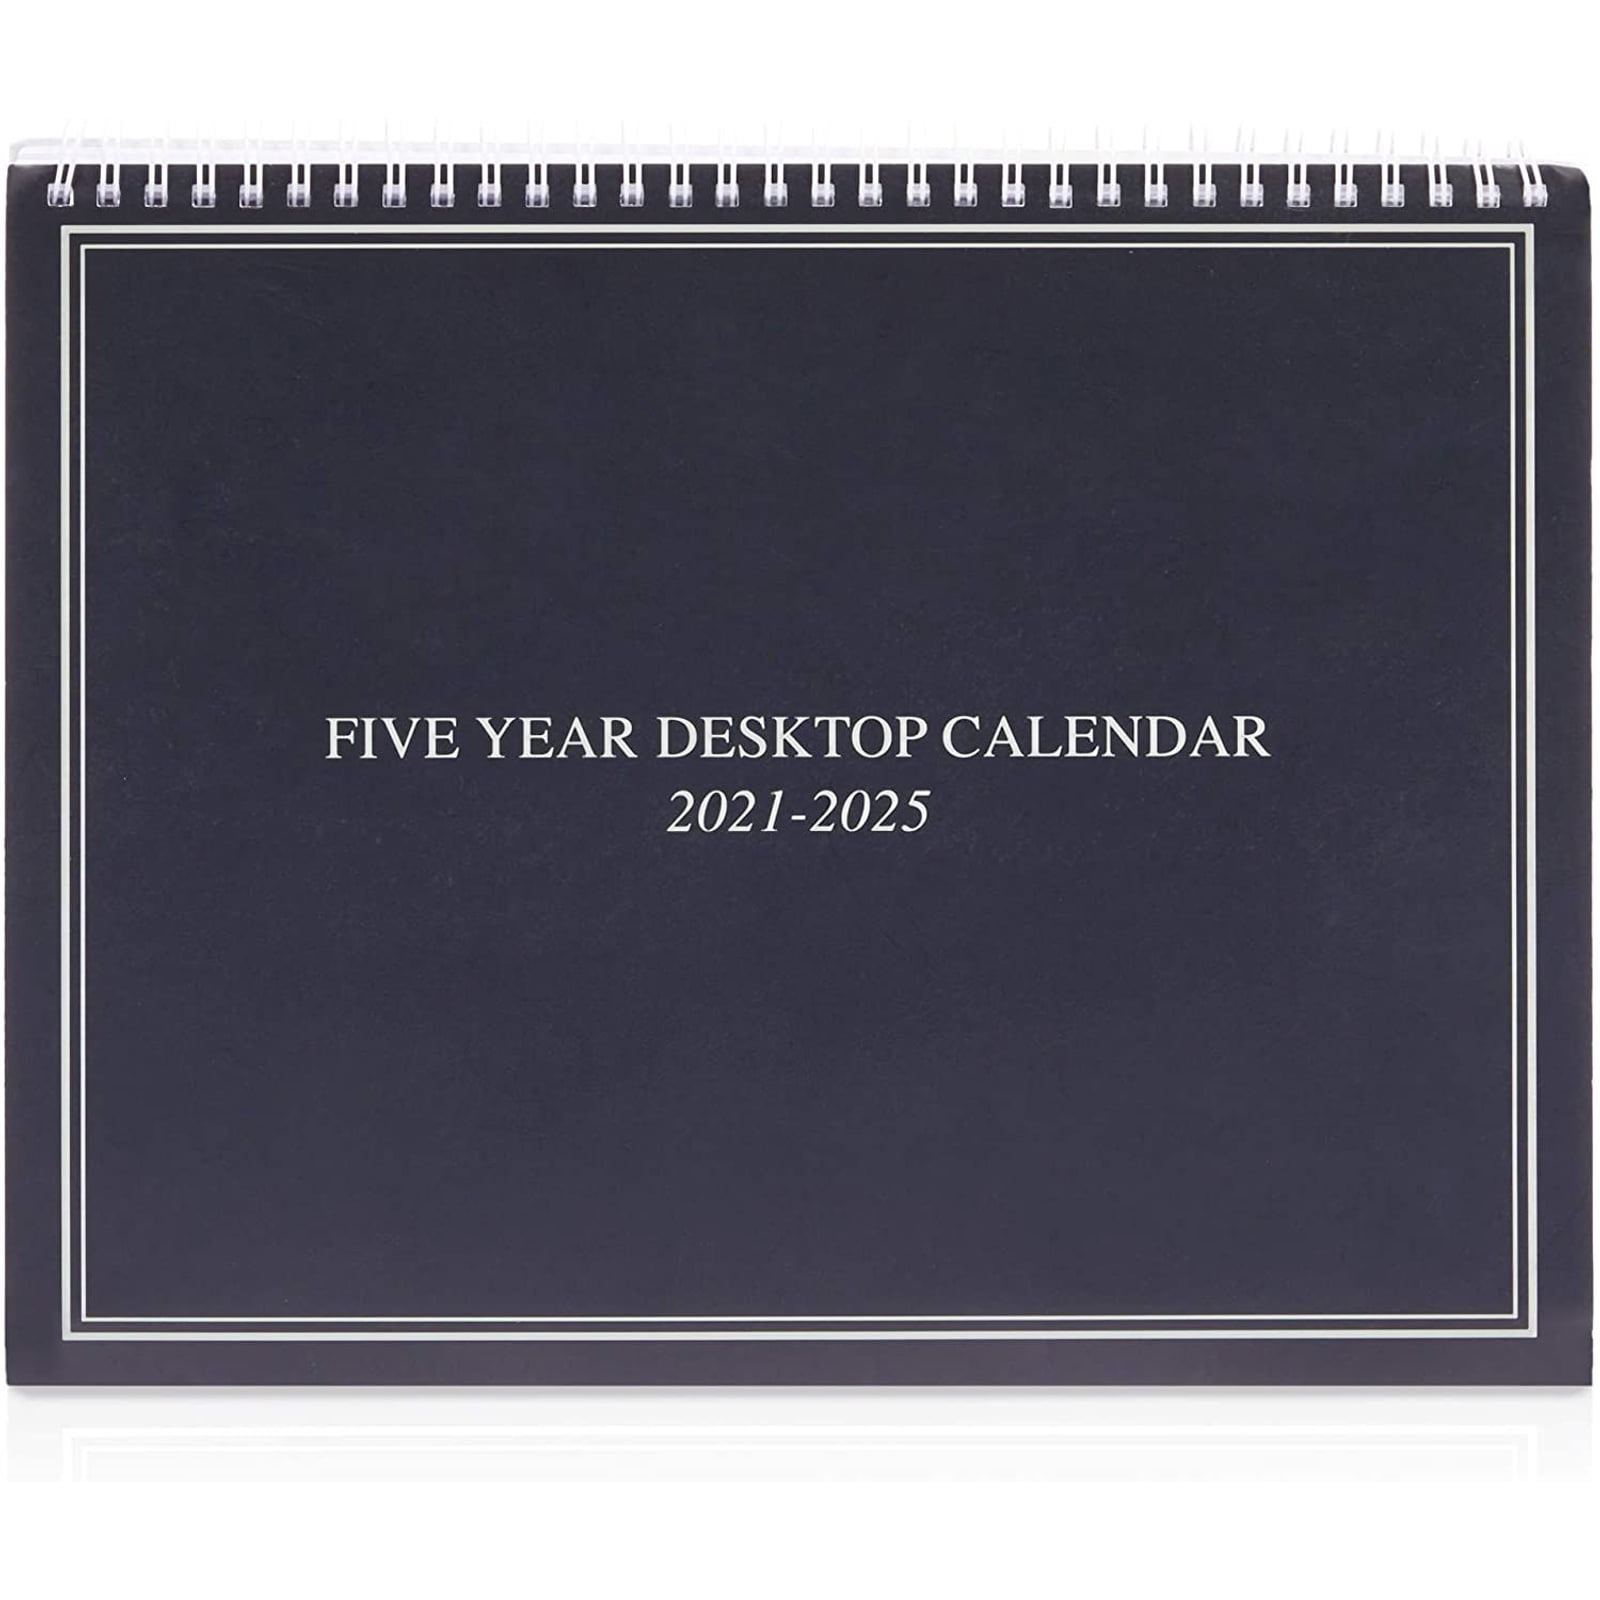 December 2020 Teacher Monthly Desk Pad Calendar Academic Year 17 x 11.5 Inches 14 Months Ruled 2020 Desk Calendar November 2019 